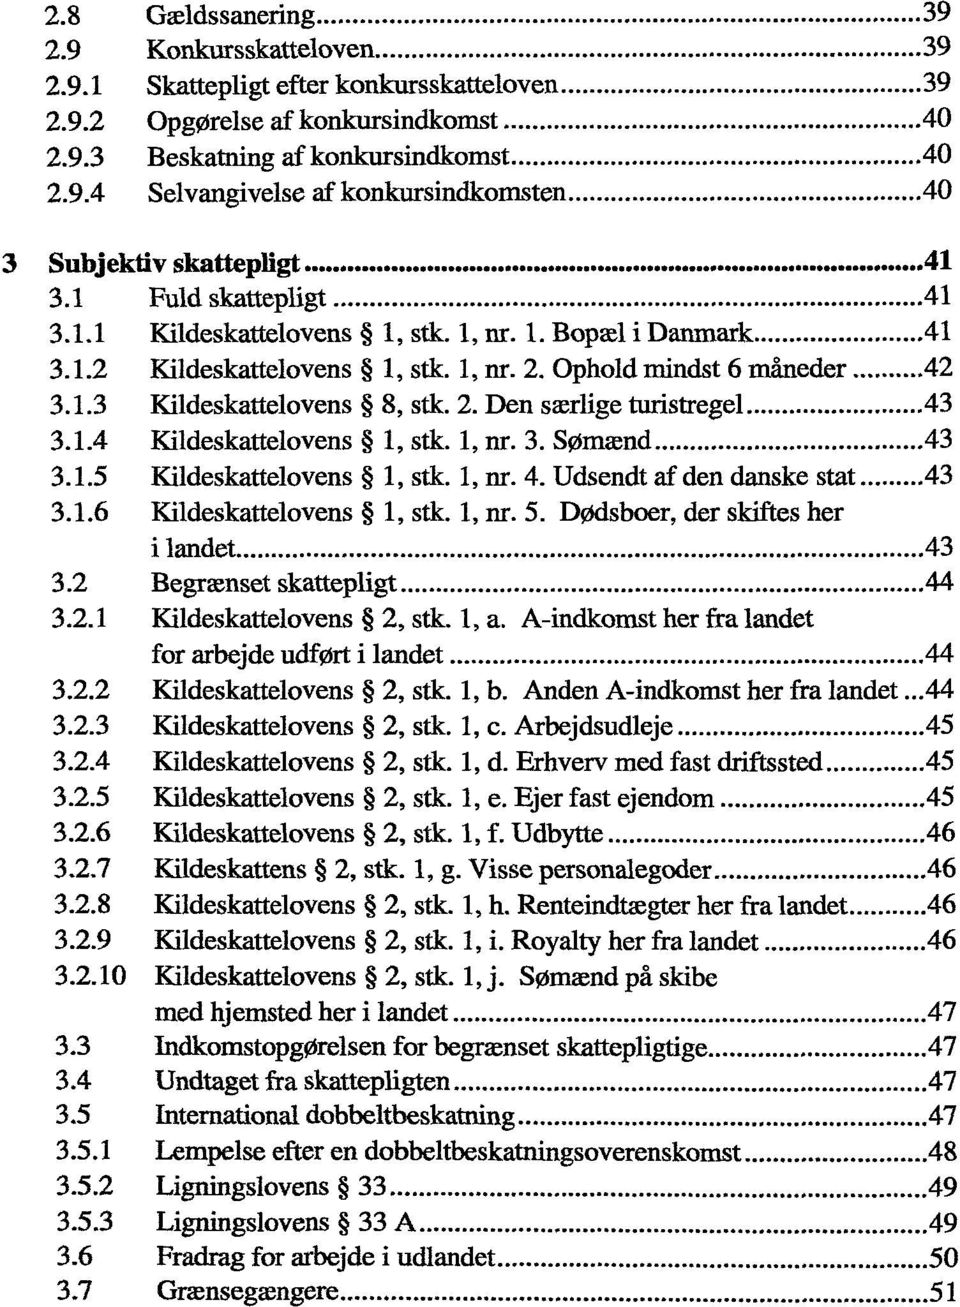 1.4 Kildeskattelovens 1, stk. 1, nr. 3. S0ma;nd 43 3.1.5 Kildeskattelovens 1, stk. 1, nr. 4. Udsendt af den danske stat 43 3.1.6 Kildeskattelovens 1, stk. 1, nr. 5.